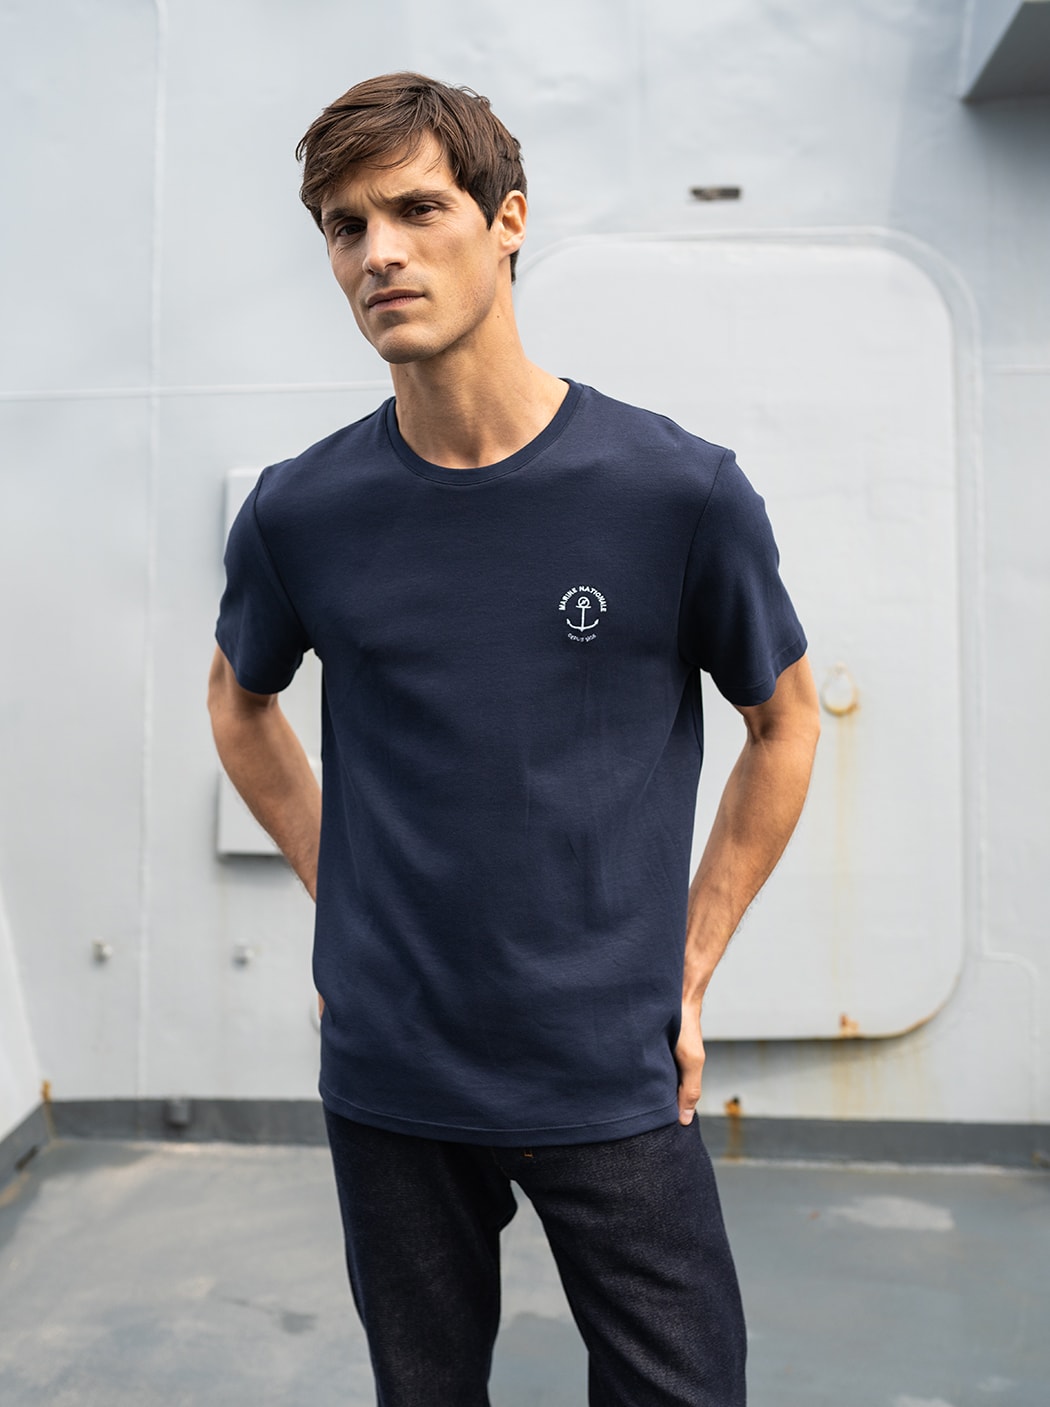 Tee-shirt brodé « Marine nationale » #couleur_Blanc